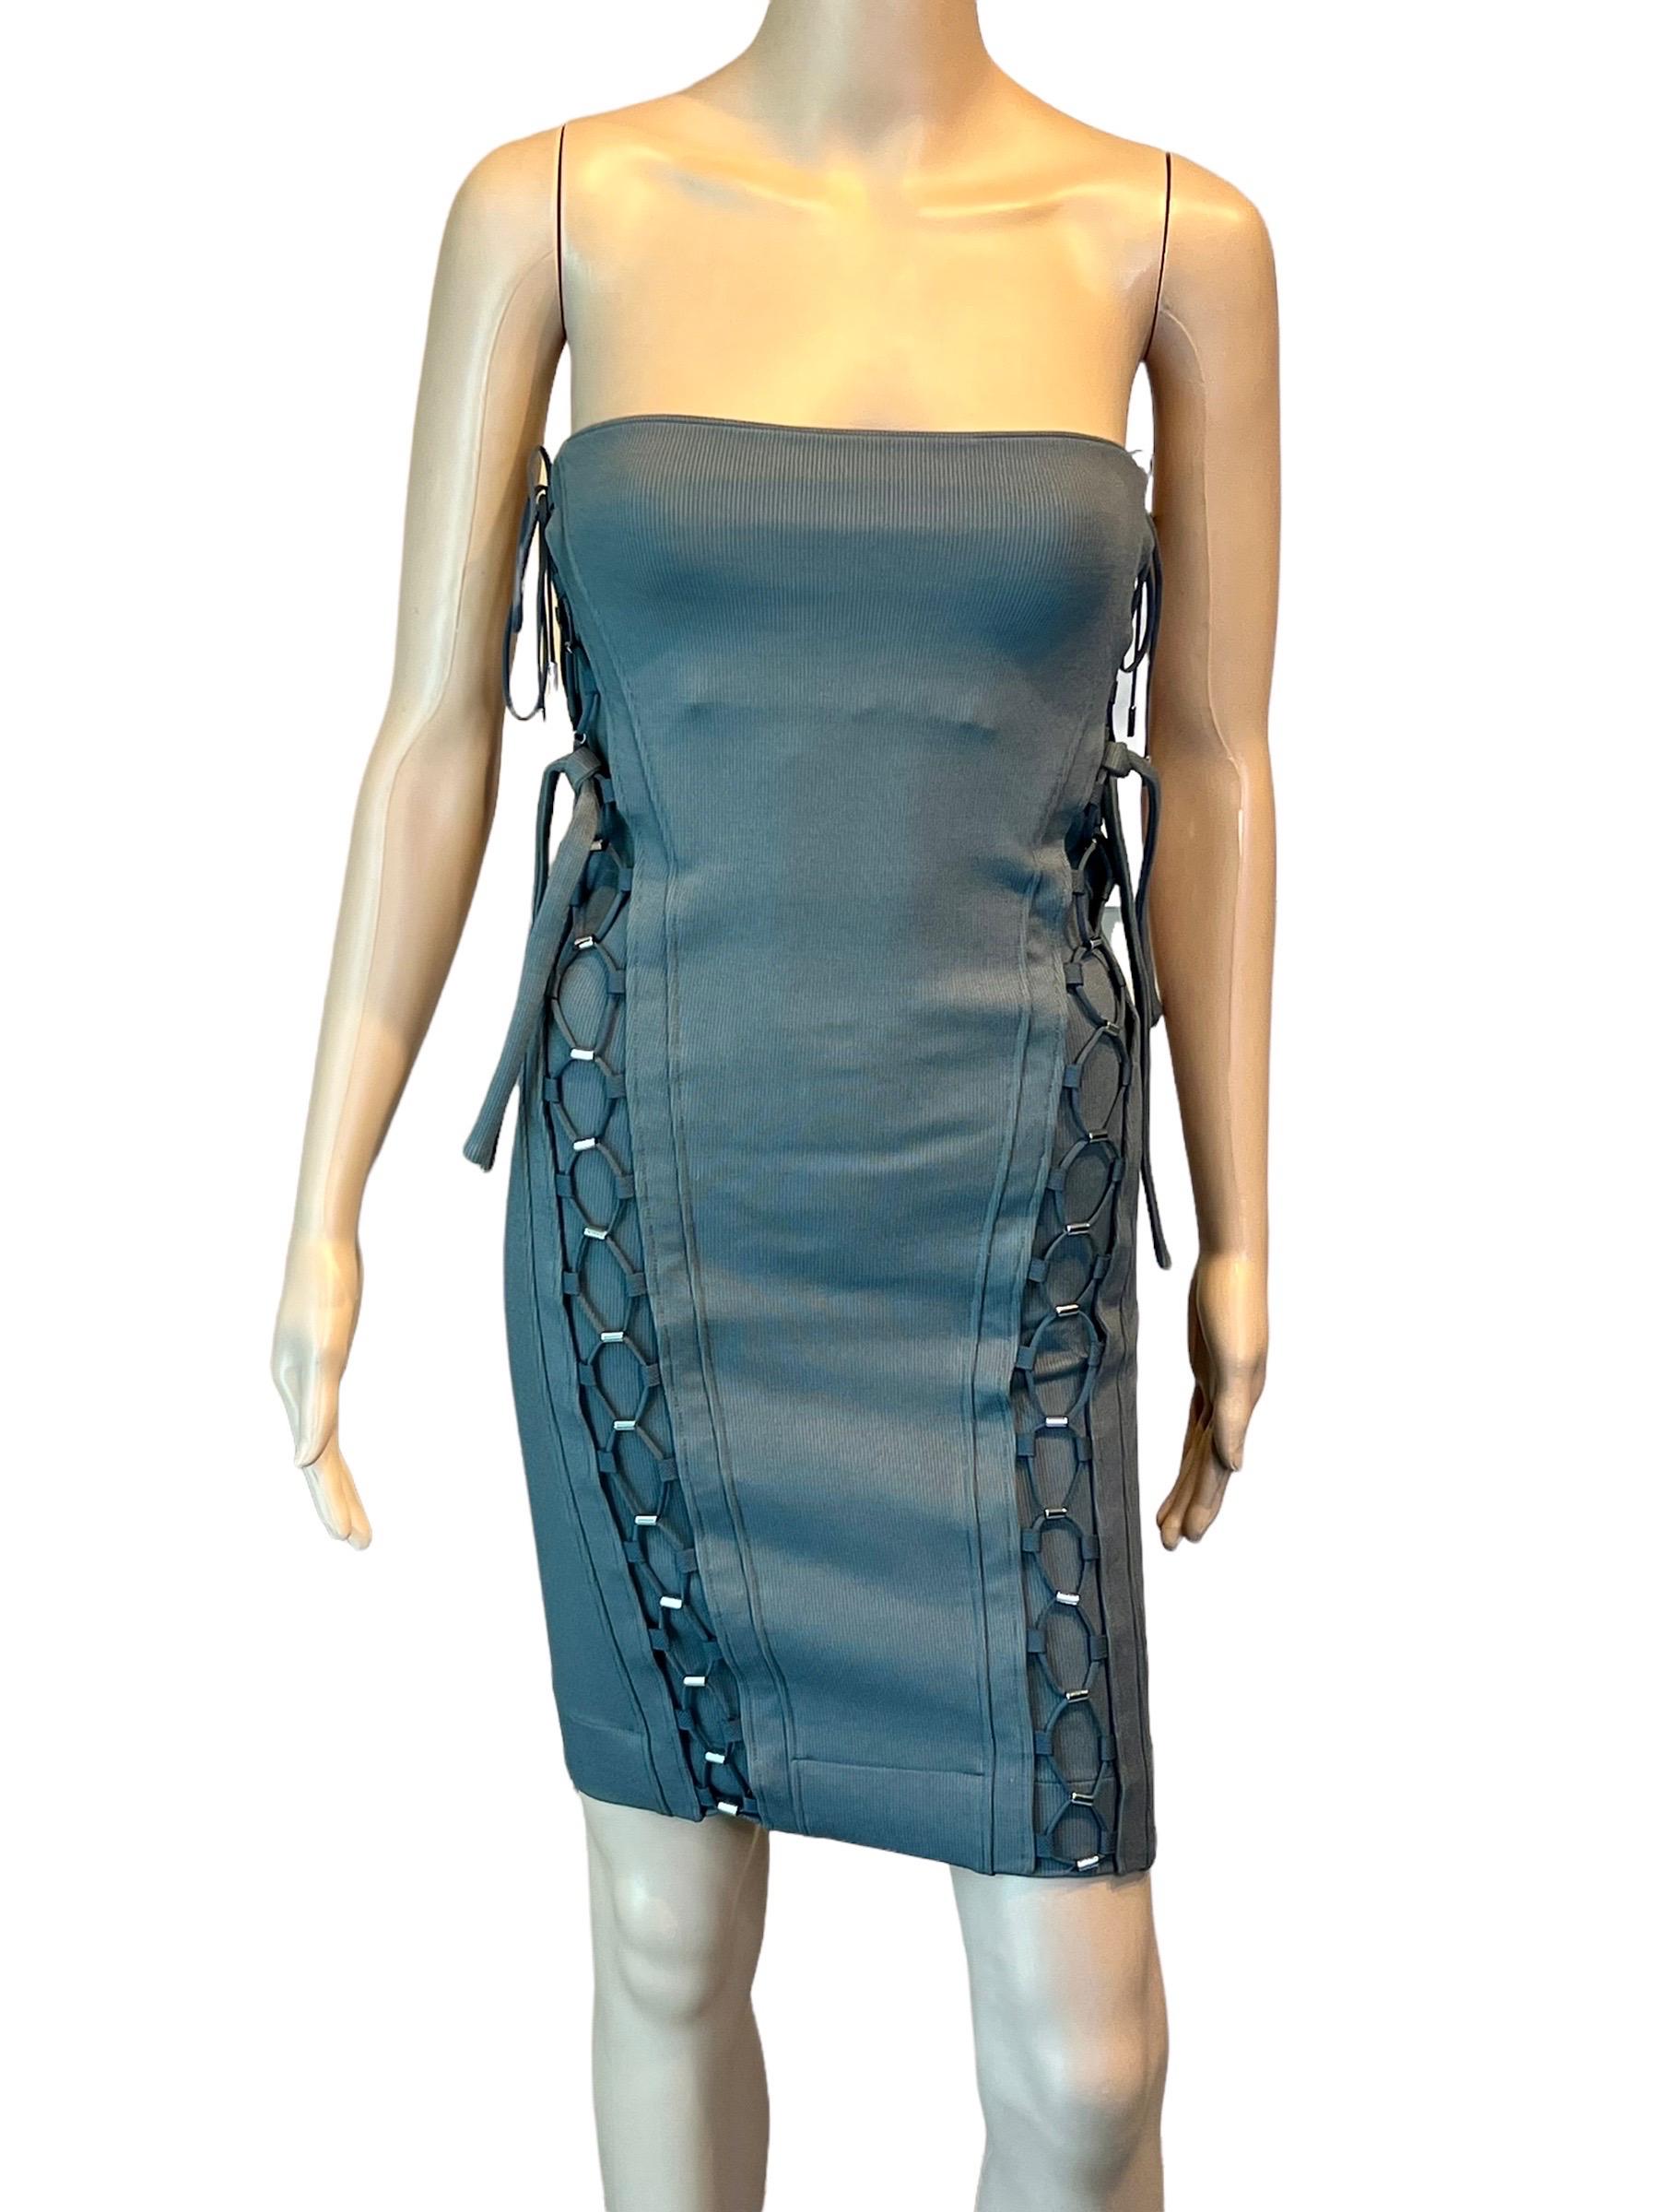 Gucci S/S 2010 Unworn Bodycon Lace Up Bandage Grey Mini Dress Size XS